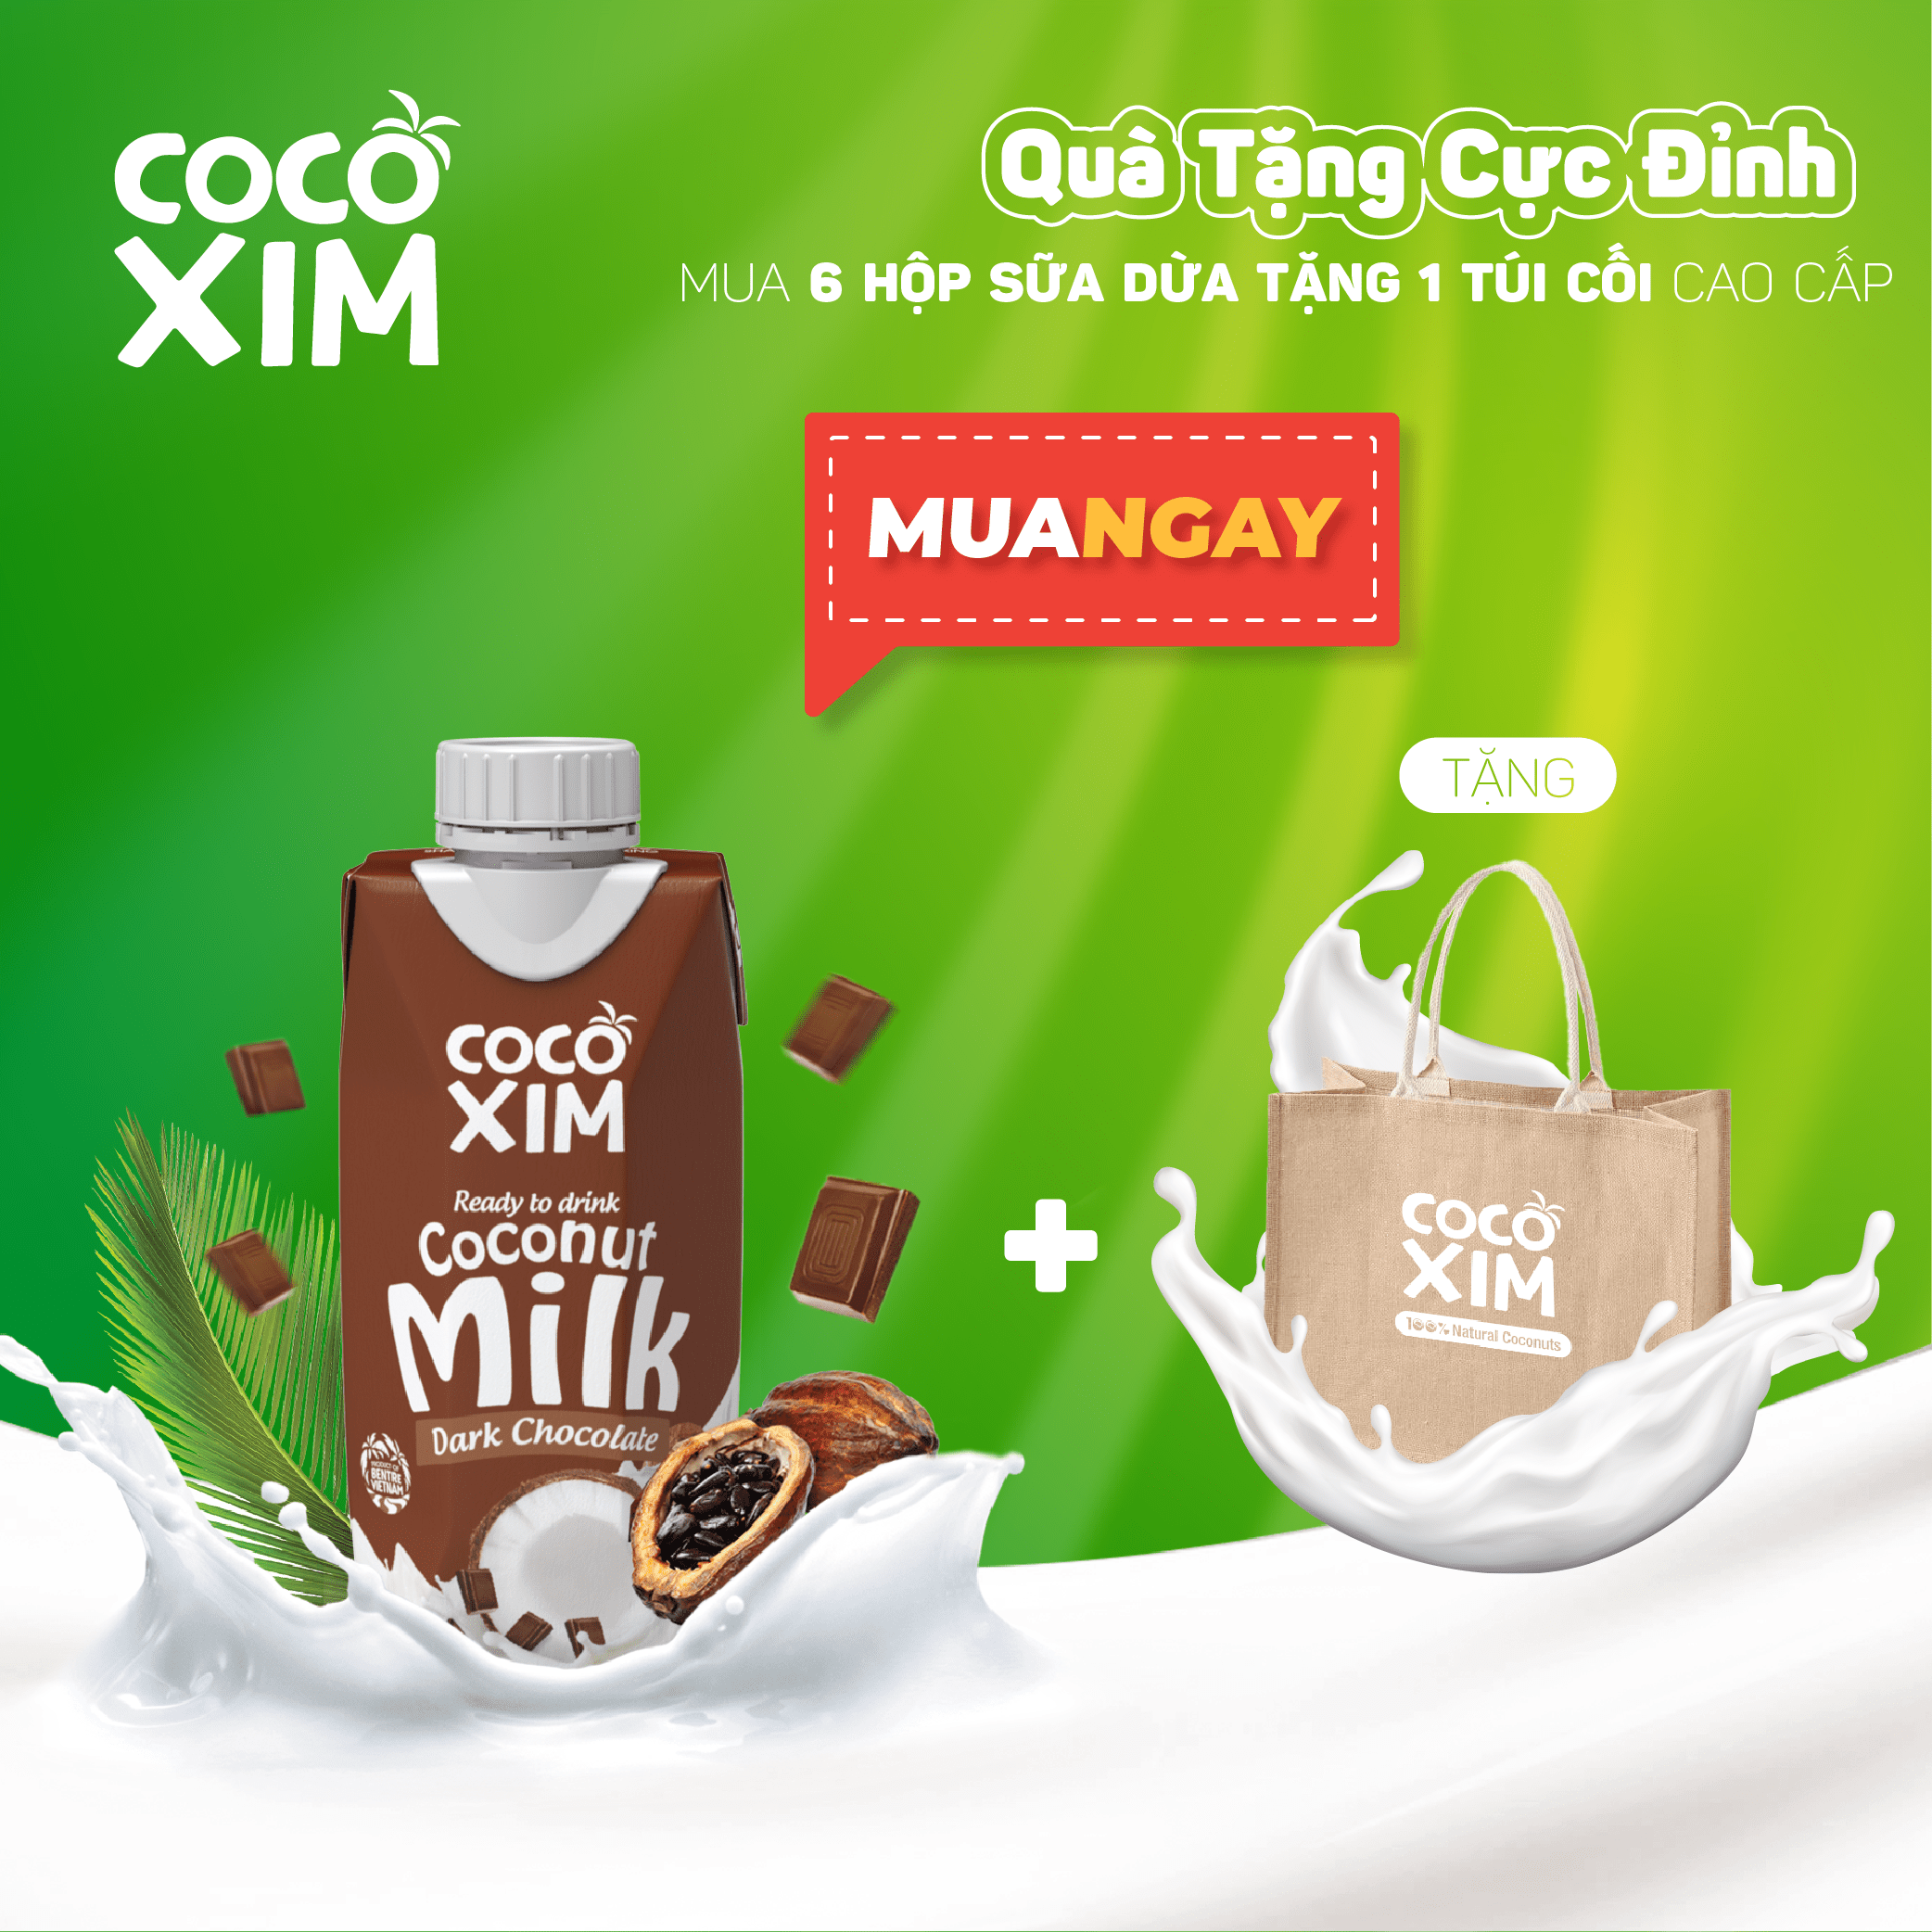 Sữa dừa Cocoxim Socola 330ml/Hộp